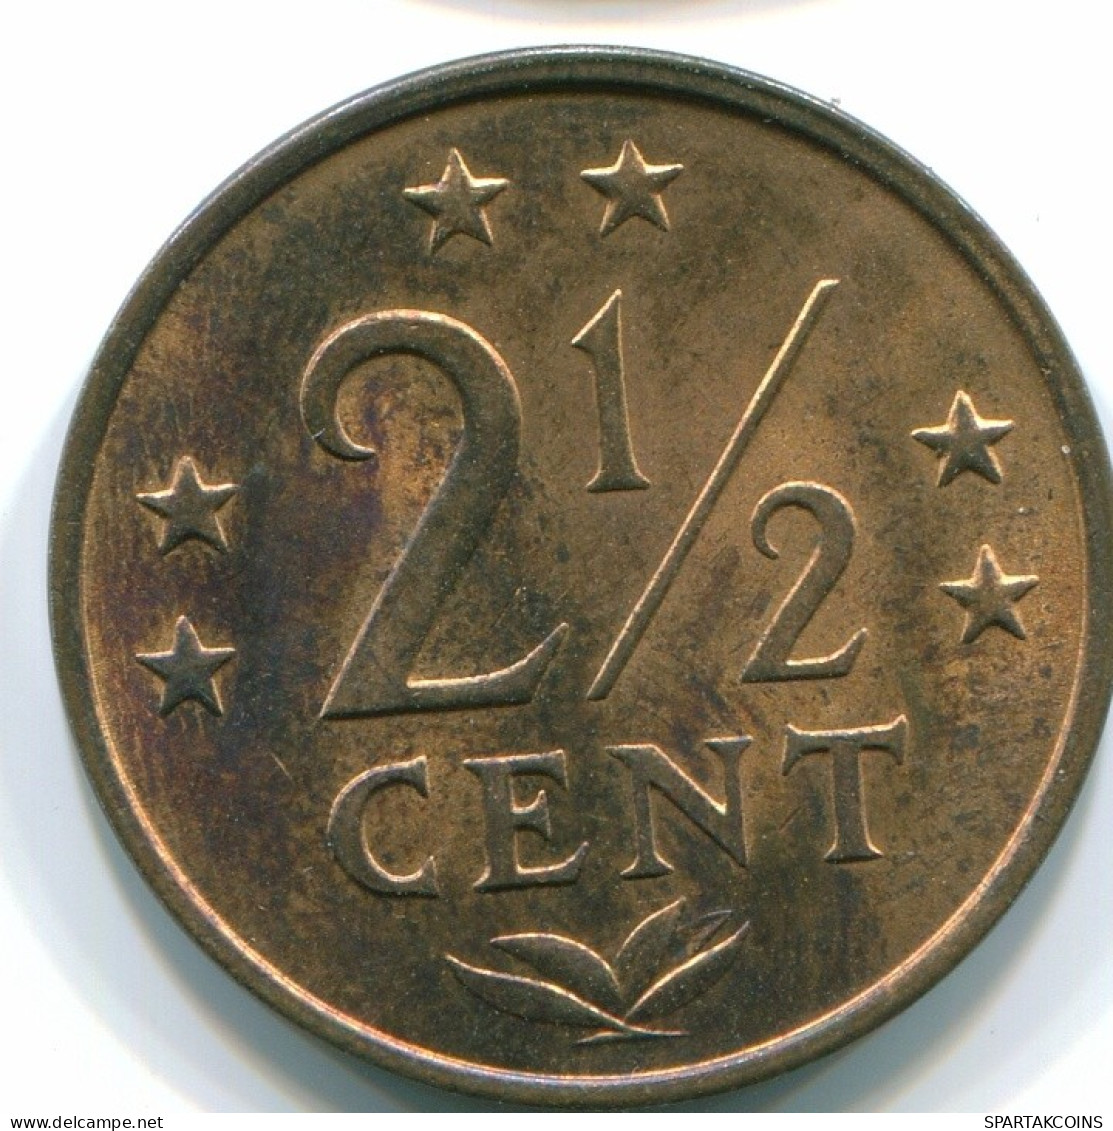 2 1/2 CENT 1976 NIEDERLÄNDISCHE ANTILLEN Bronze Koloniale Münze #S10533.D.A - Netherlands Antilles